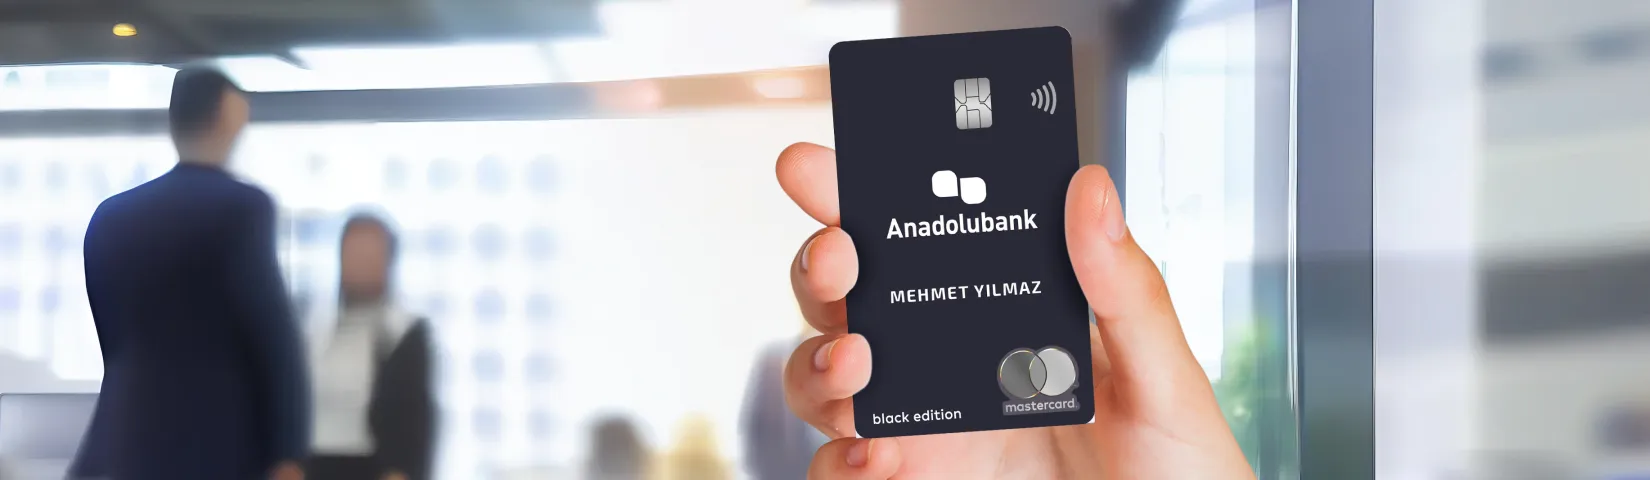 Anadolubank Worldcard